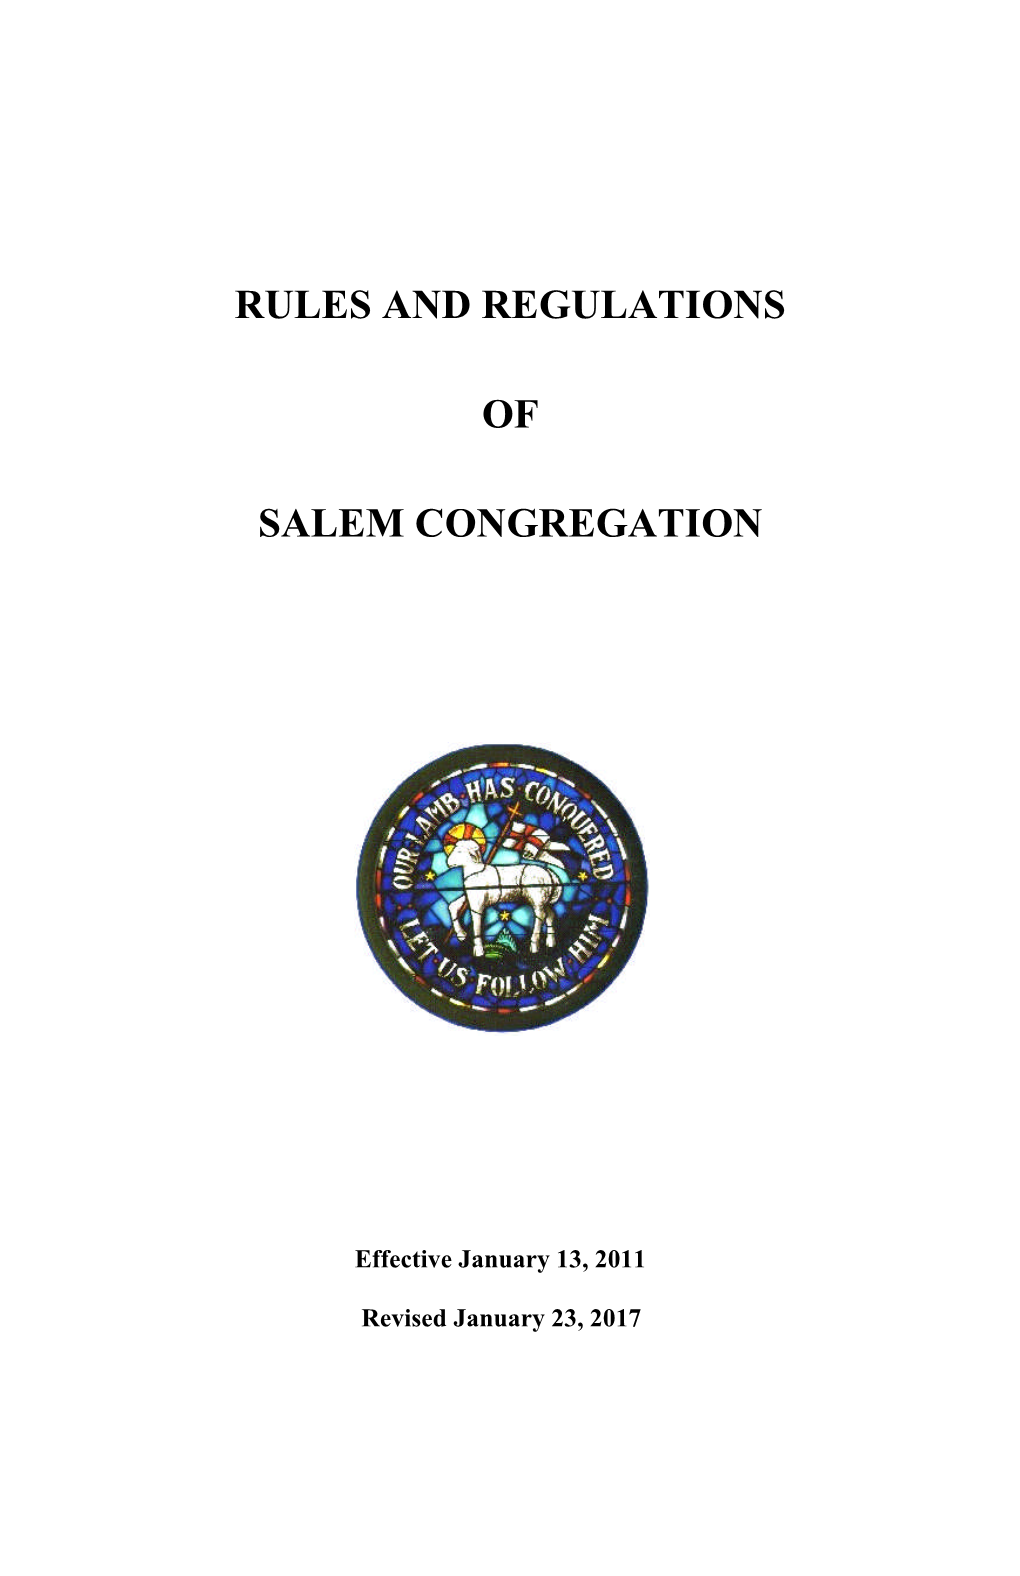 Rules and Regulations of Salem Congregation